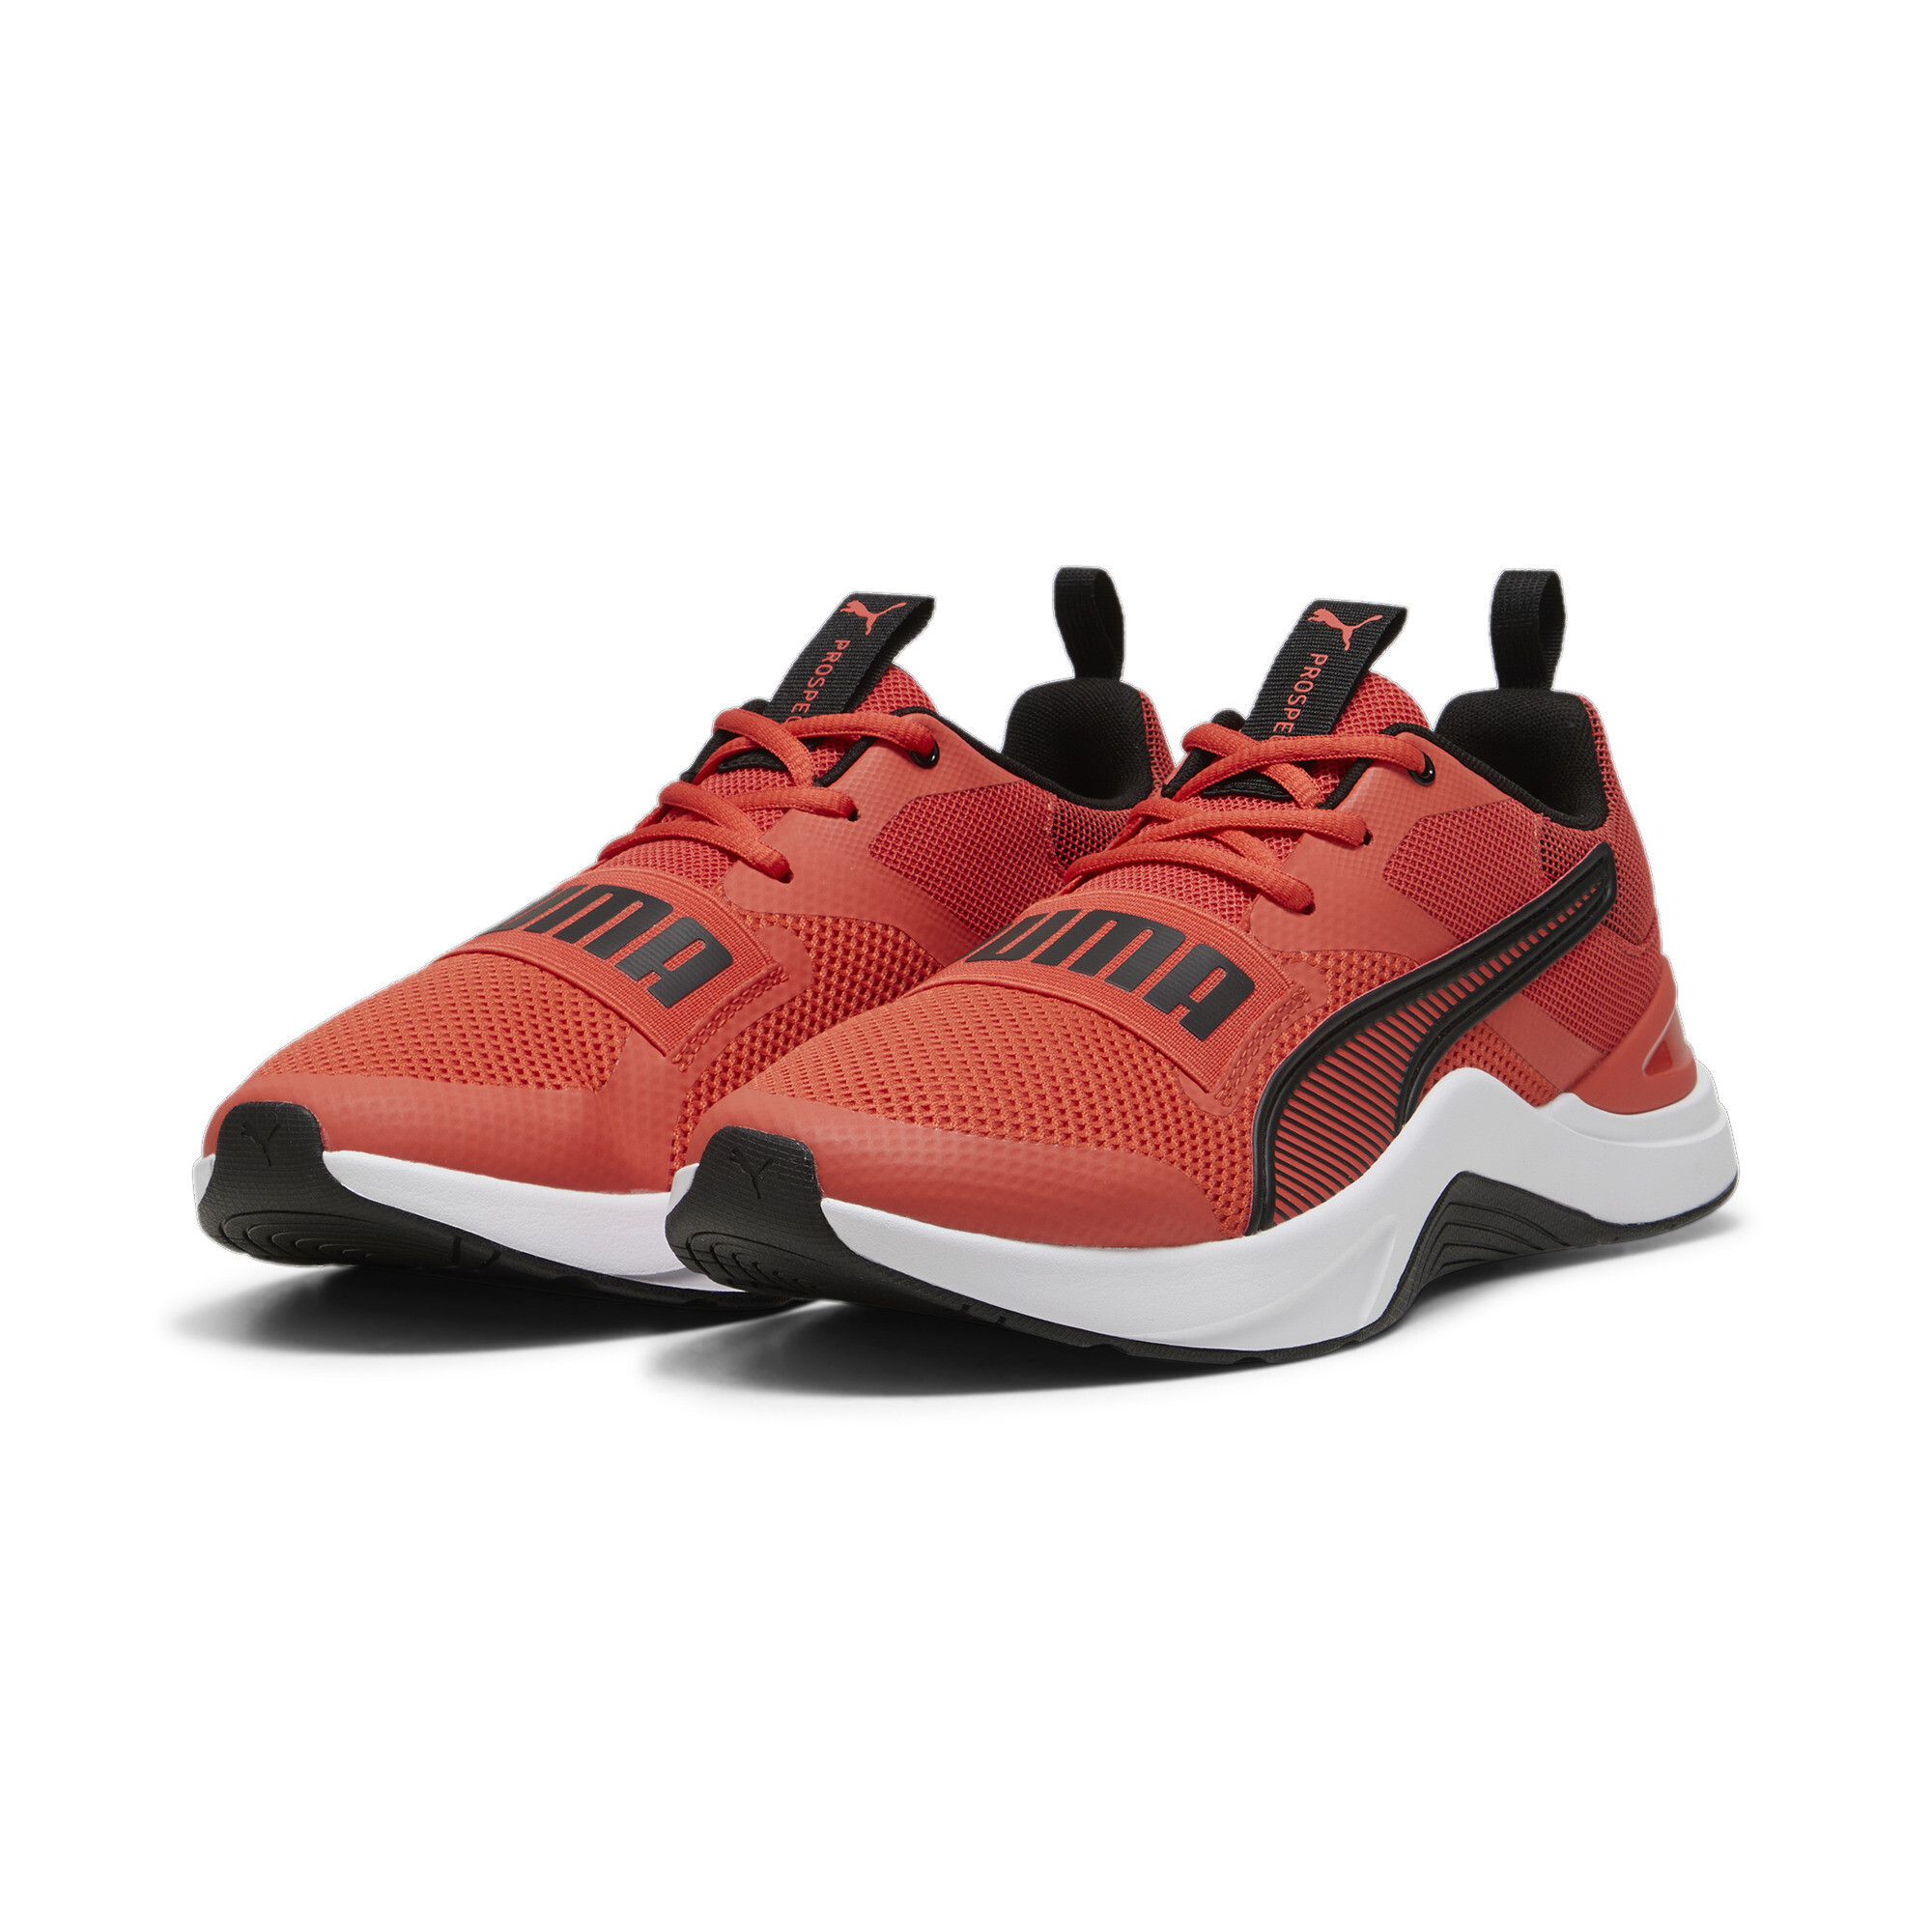 Men's PUMA Prospect Training Shoes In Red, Size EU 47